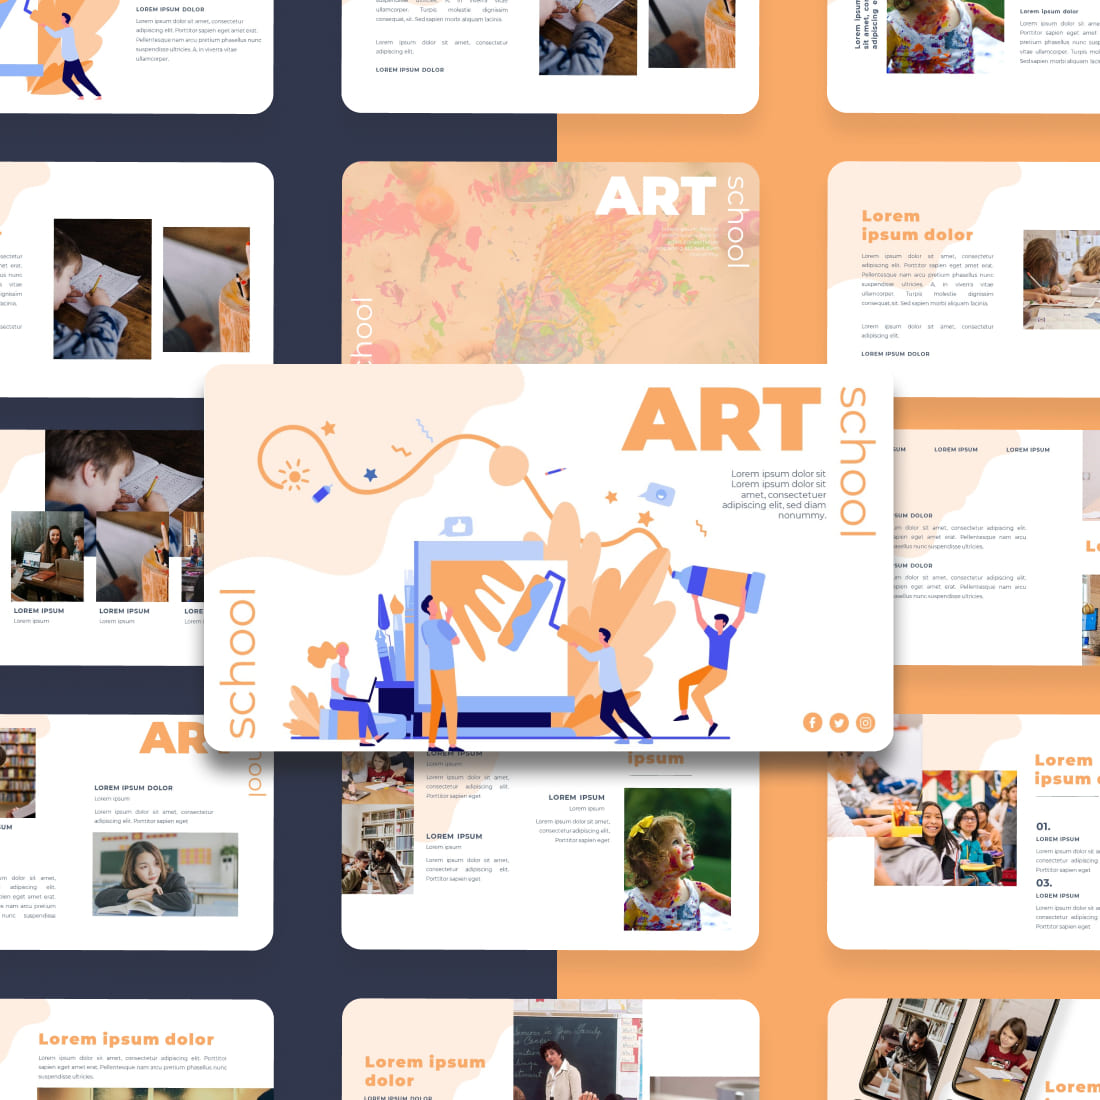 Art School Presentation: 50 Slides PPTX, KEY, Google Slides cover.